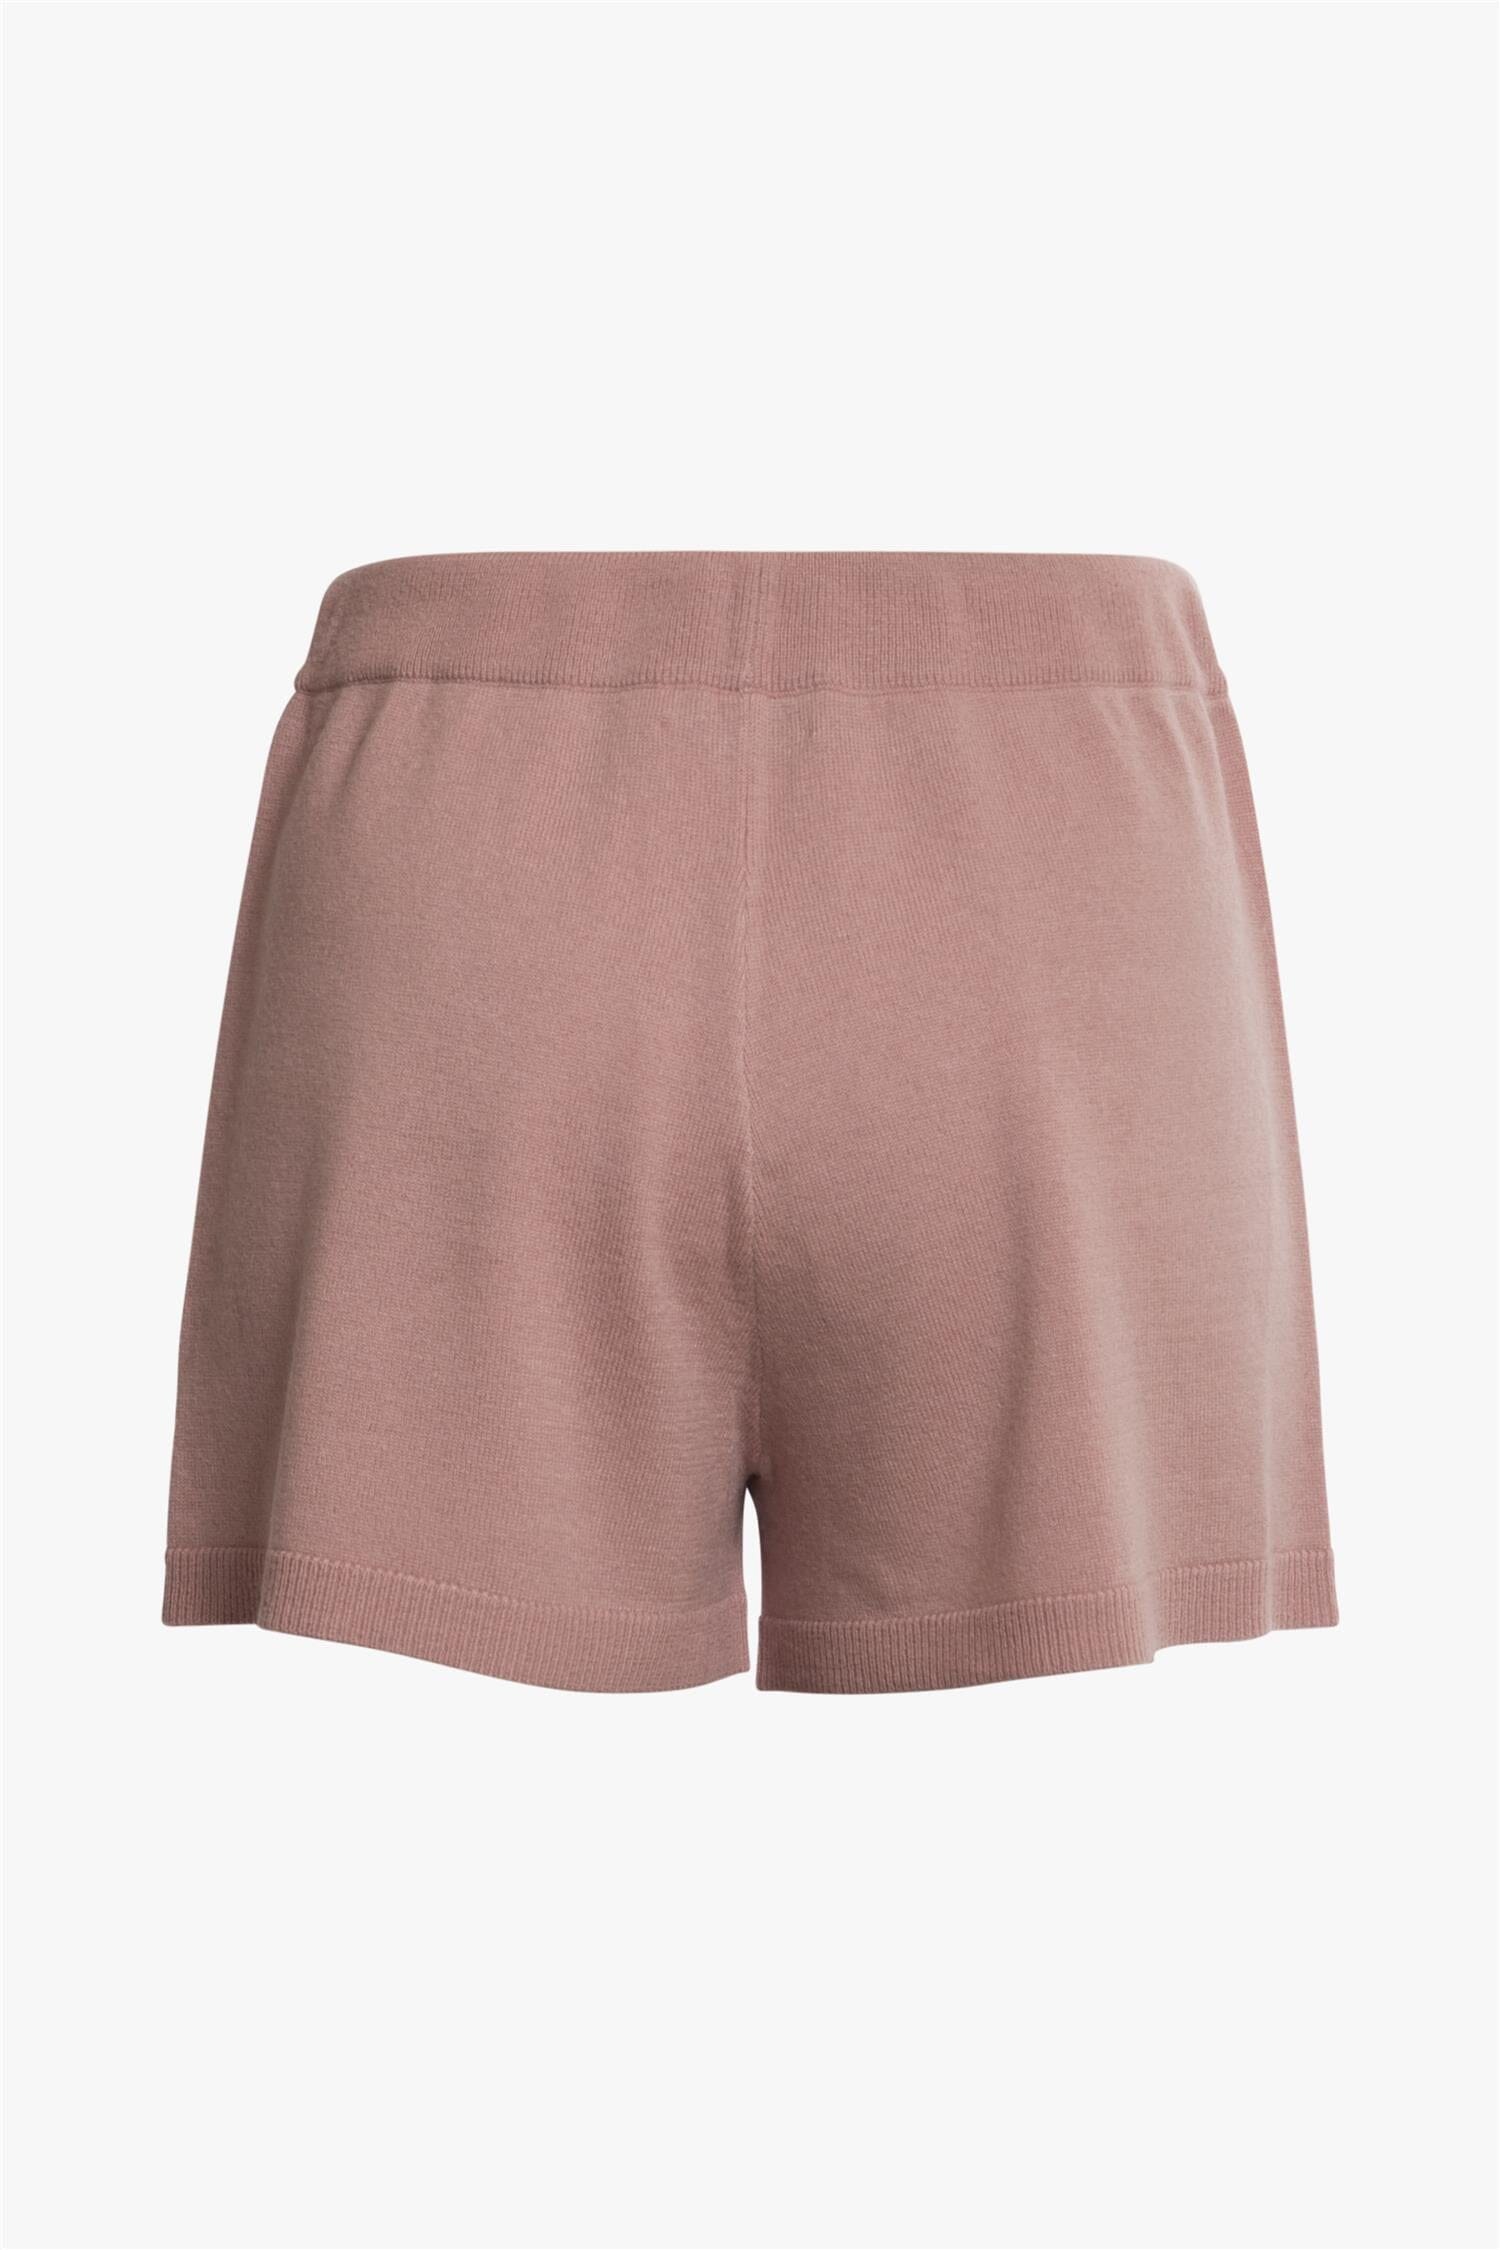 ArnieSays: Marina Solid Dusty Pink Bukse